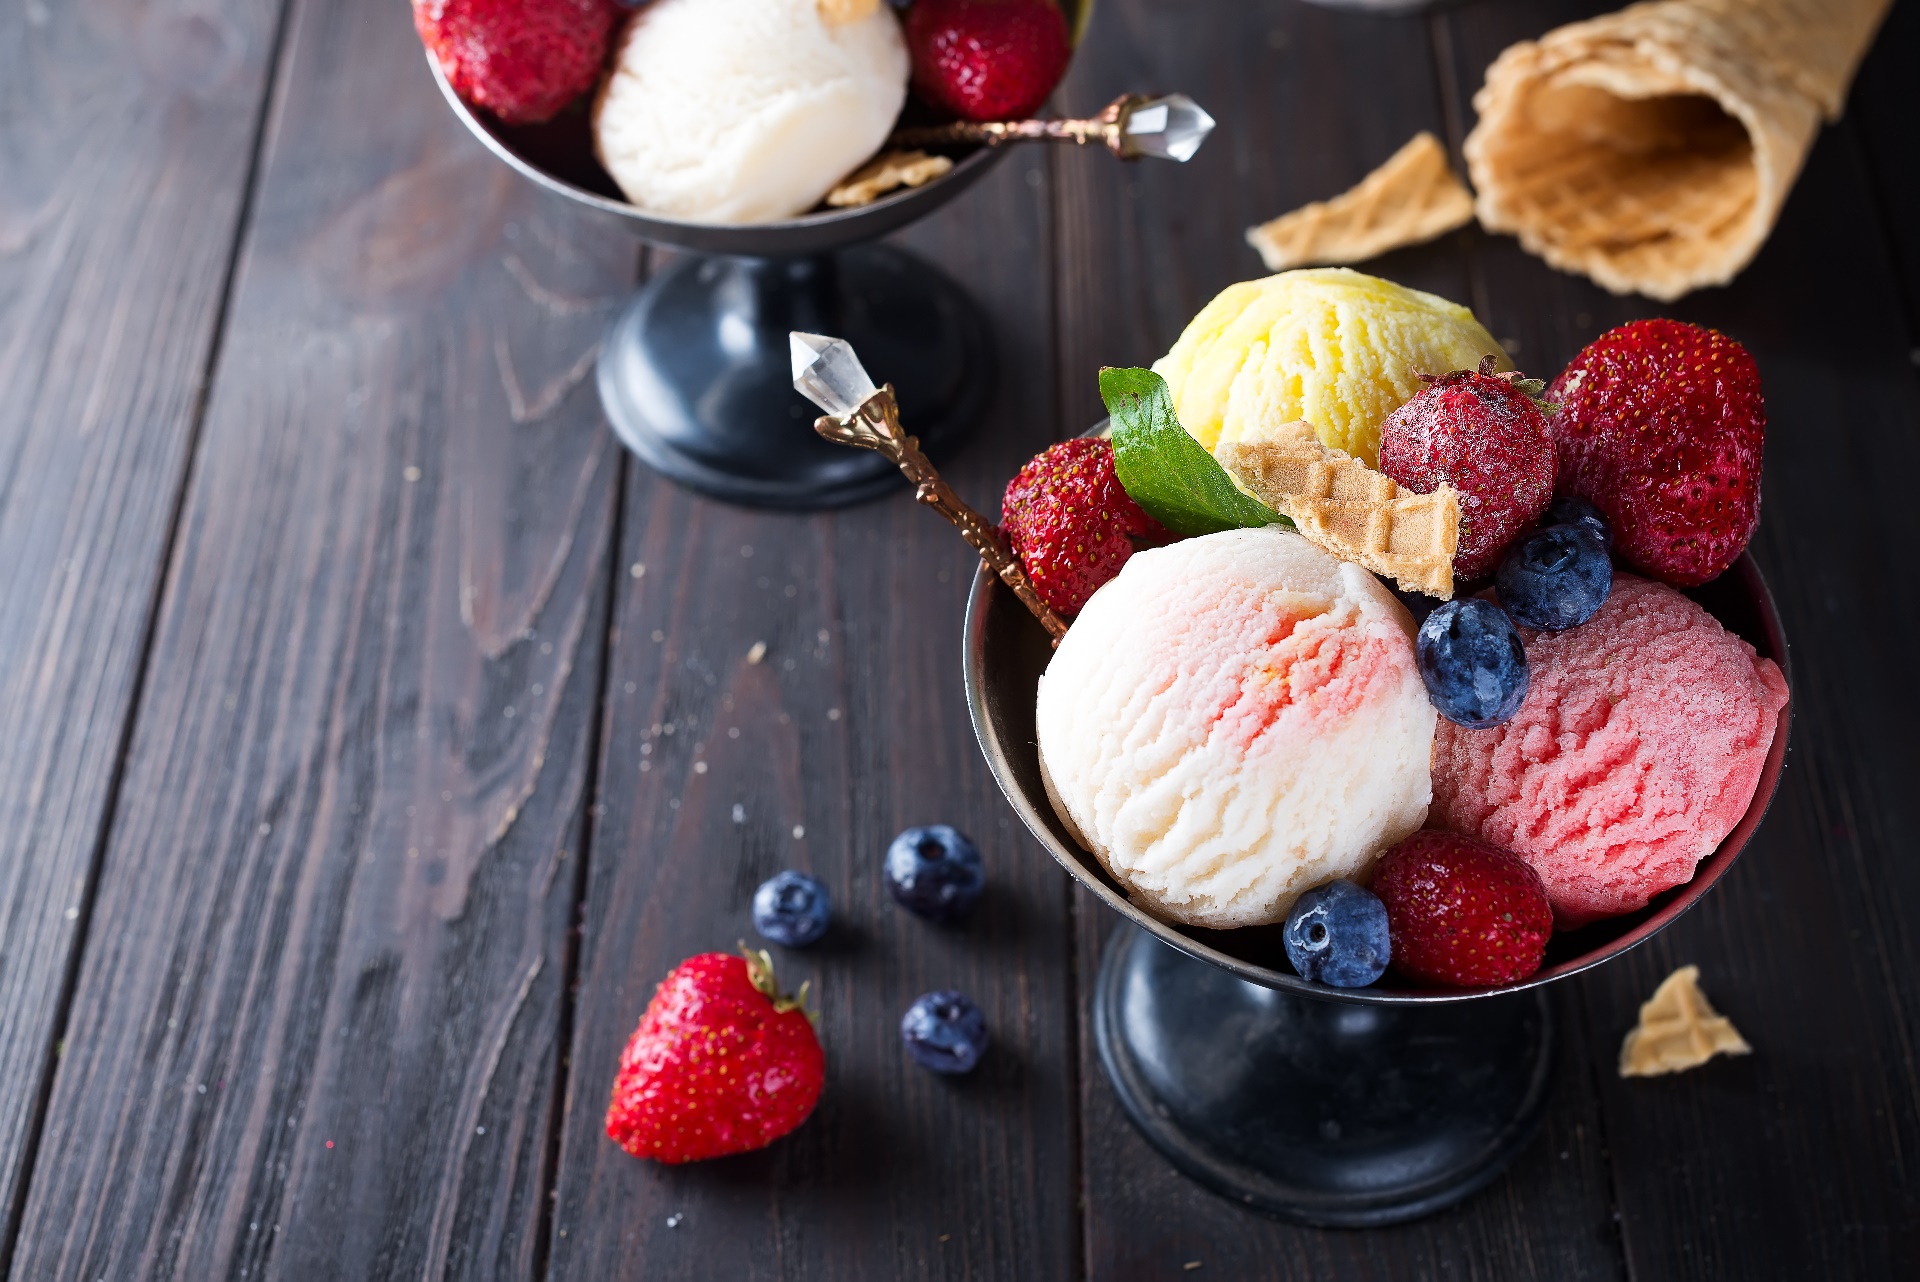 General 1920x1282 sweets fruit food waffles ice cream blueberries strawberries raspberries mint leaves wooden surface ice